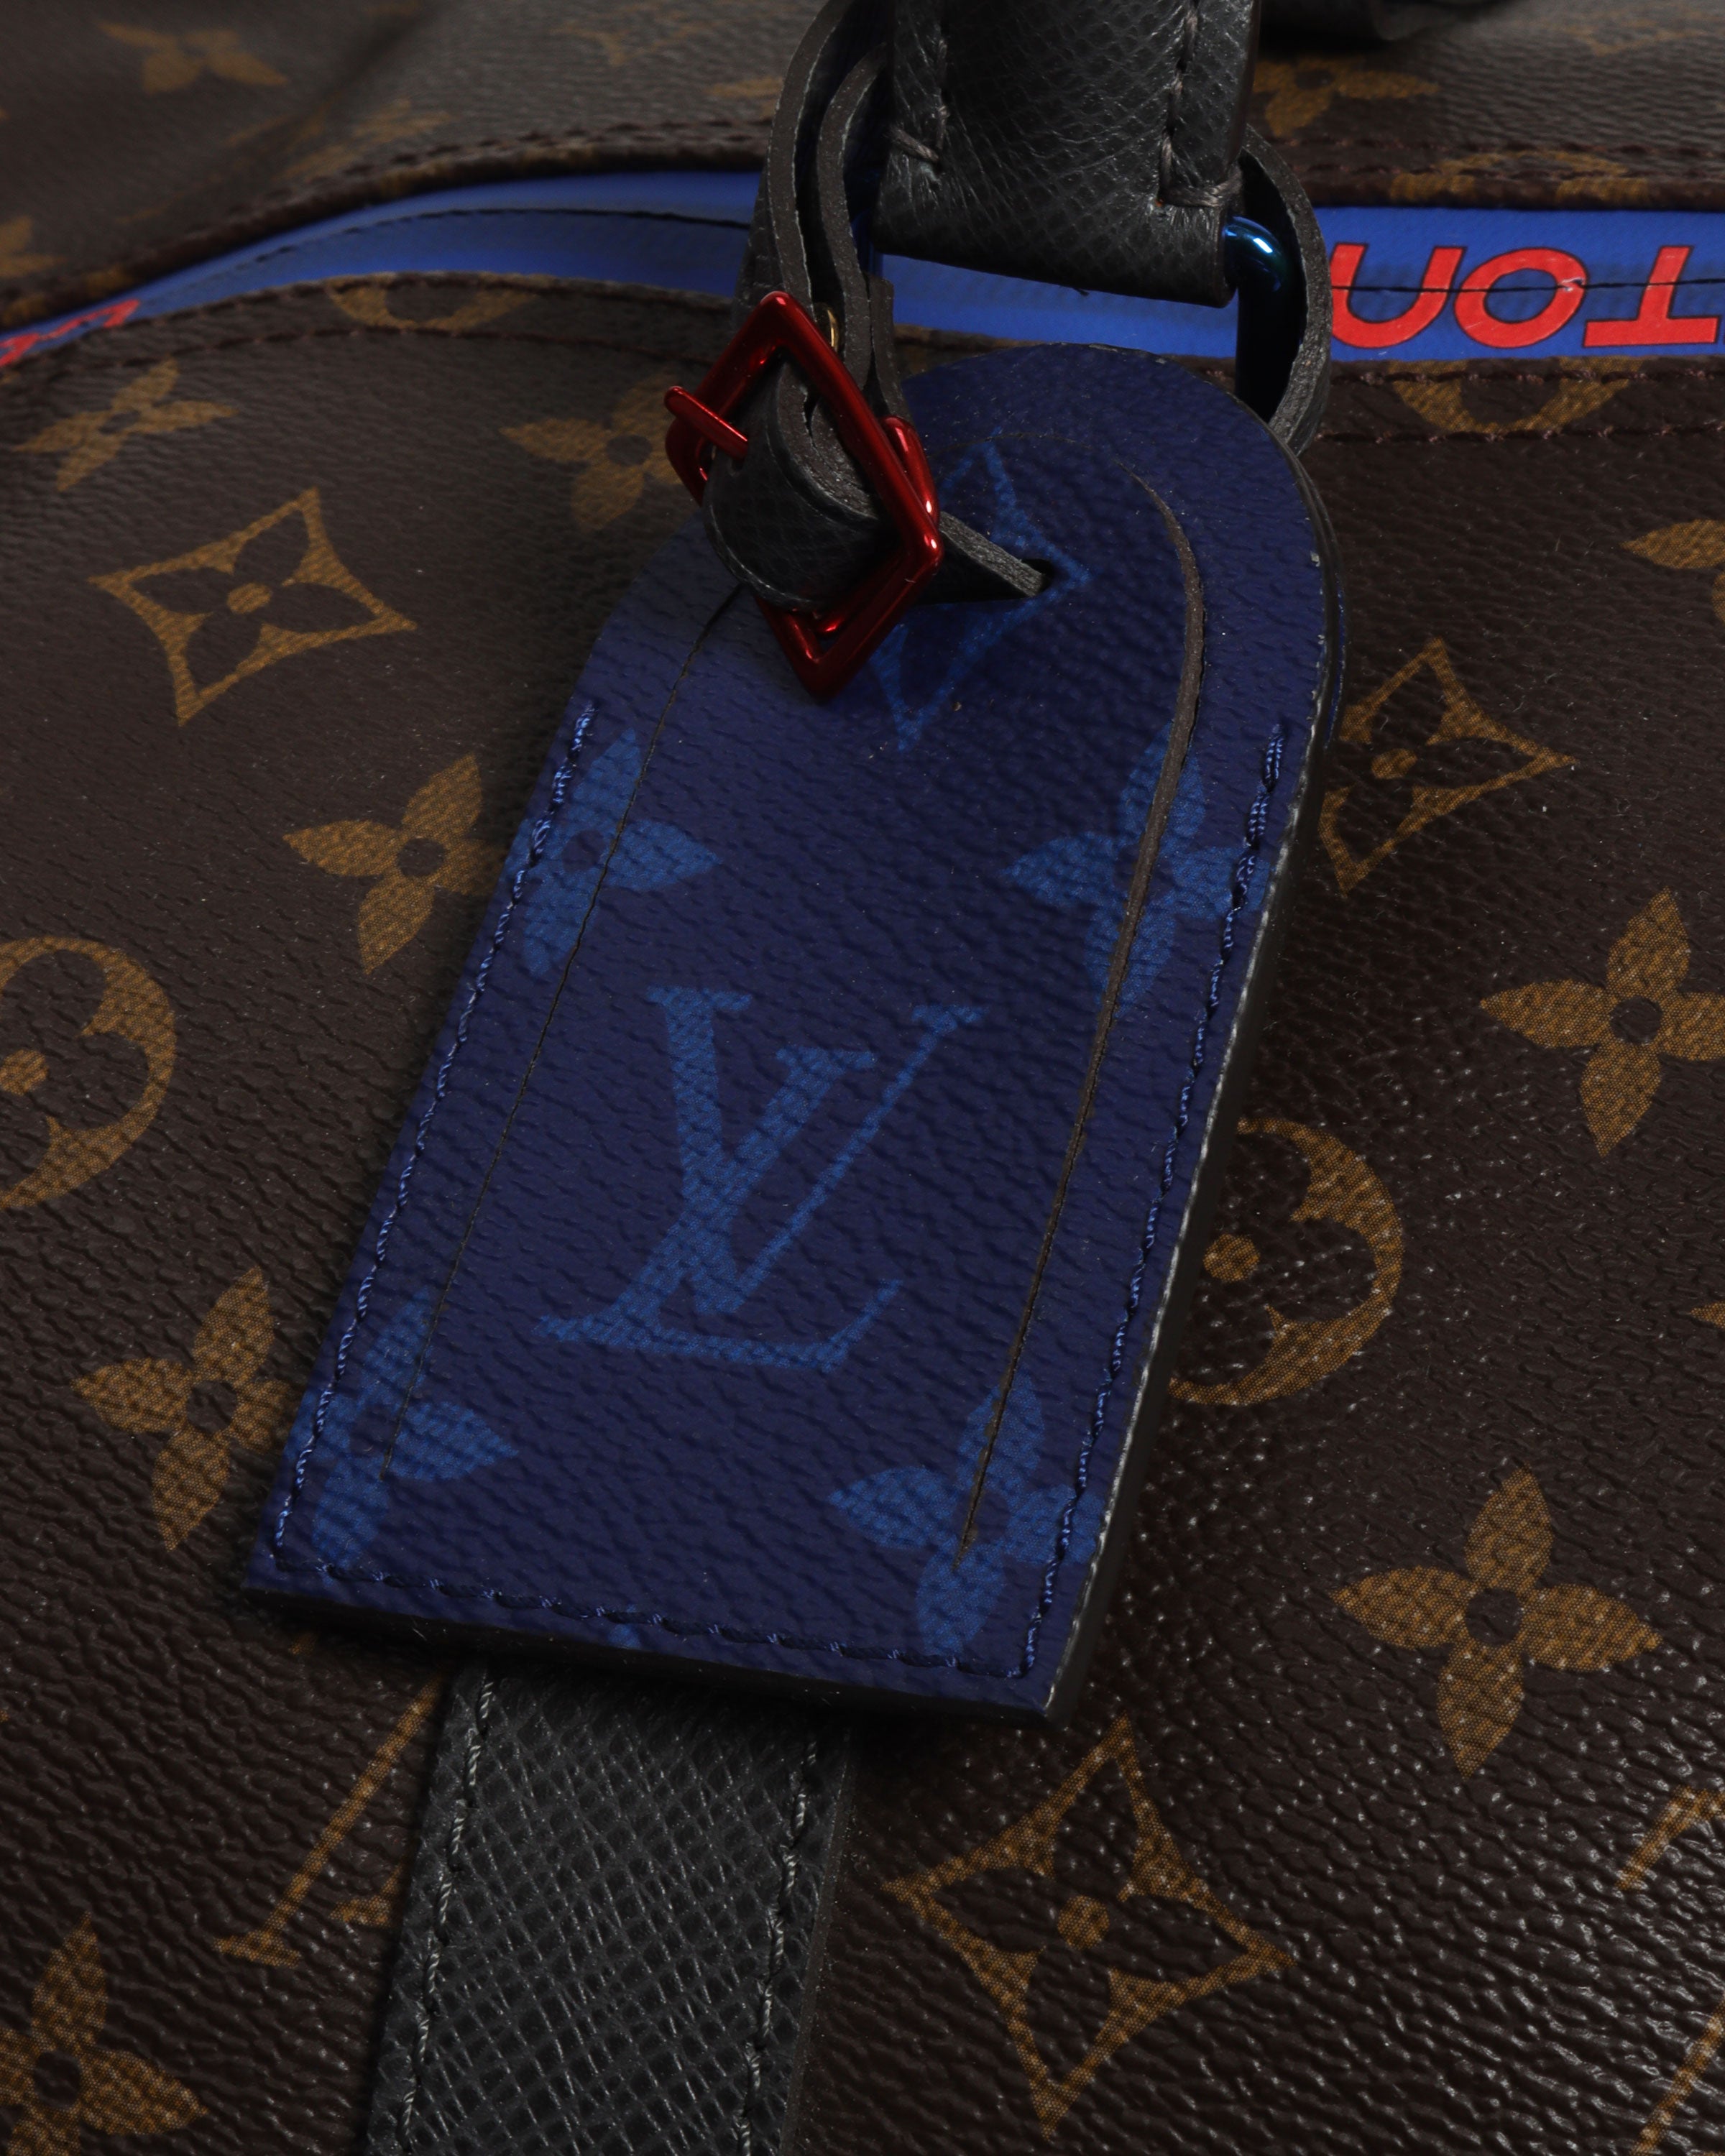 Bags Briefcases Louis Vuitton Louis Vuitton Keepall 50 Titanium Kim Jones